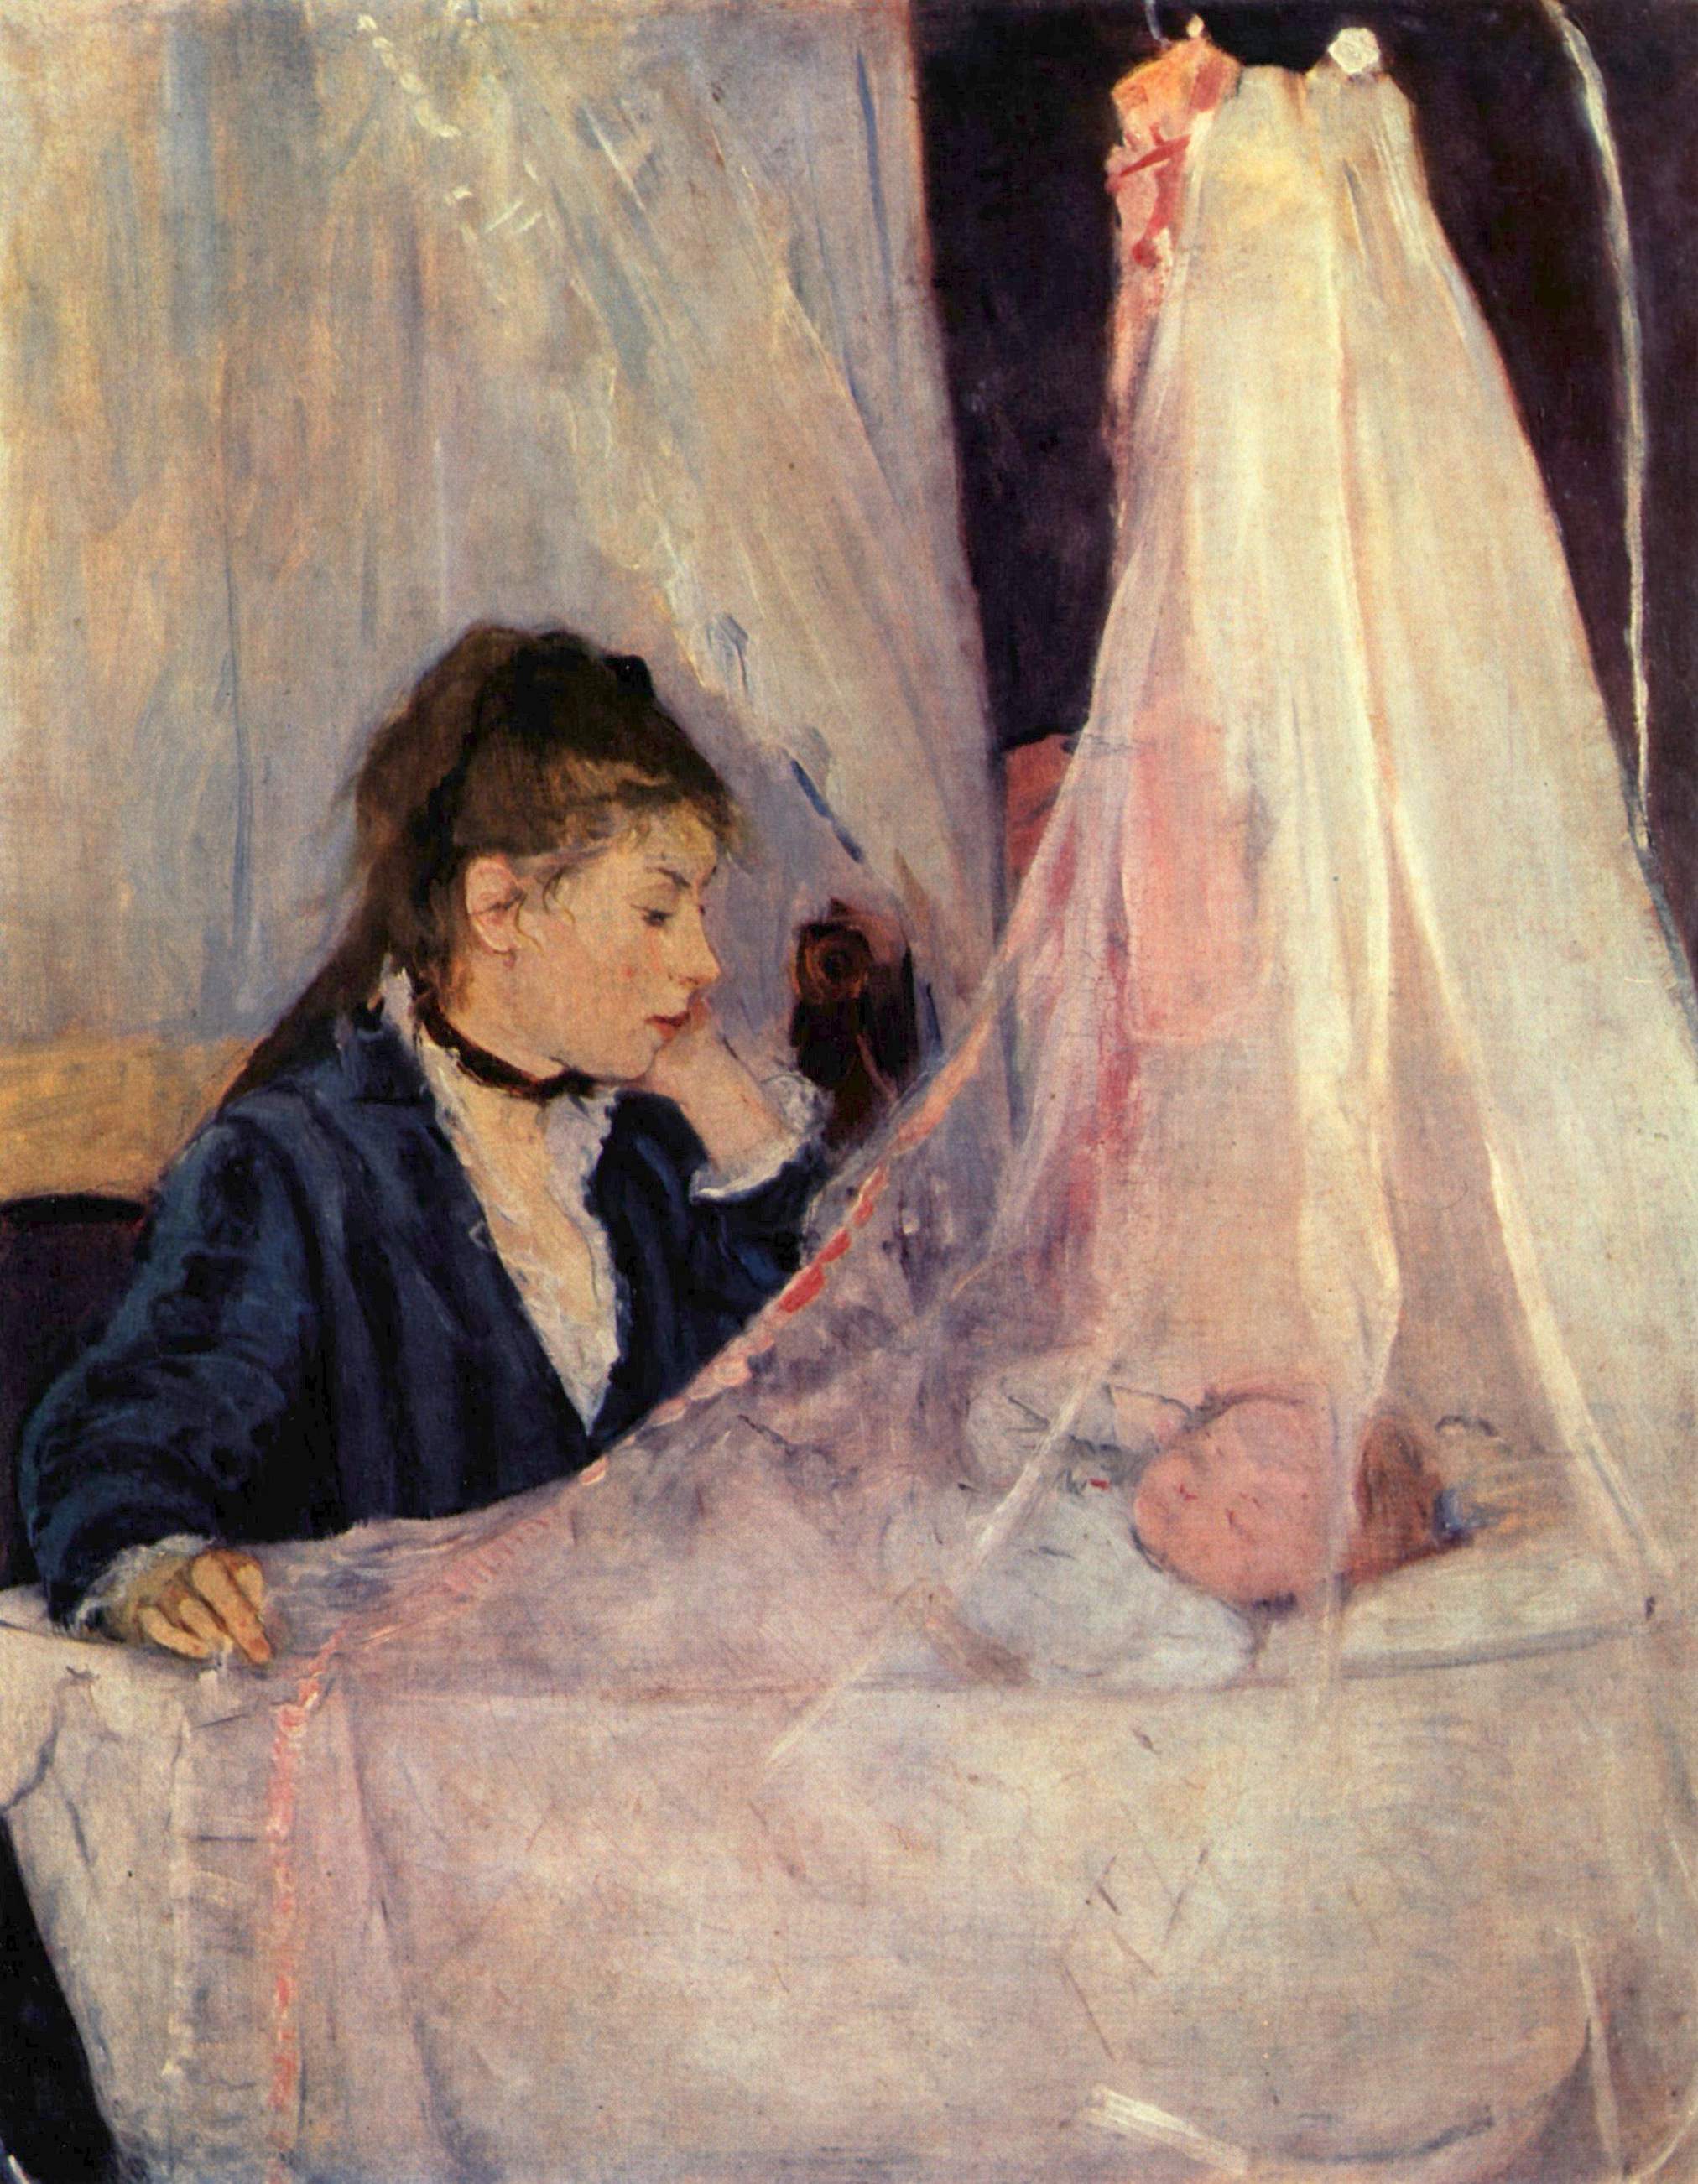 Berthe Morisot "The Cradle" (1872)